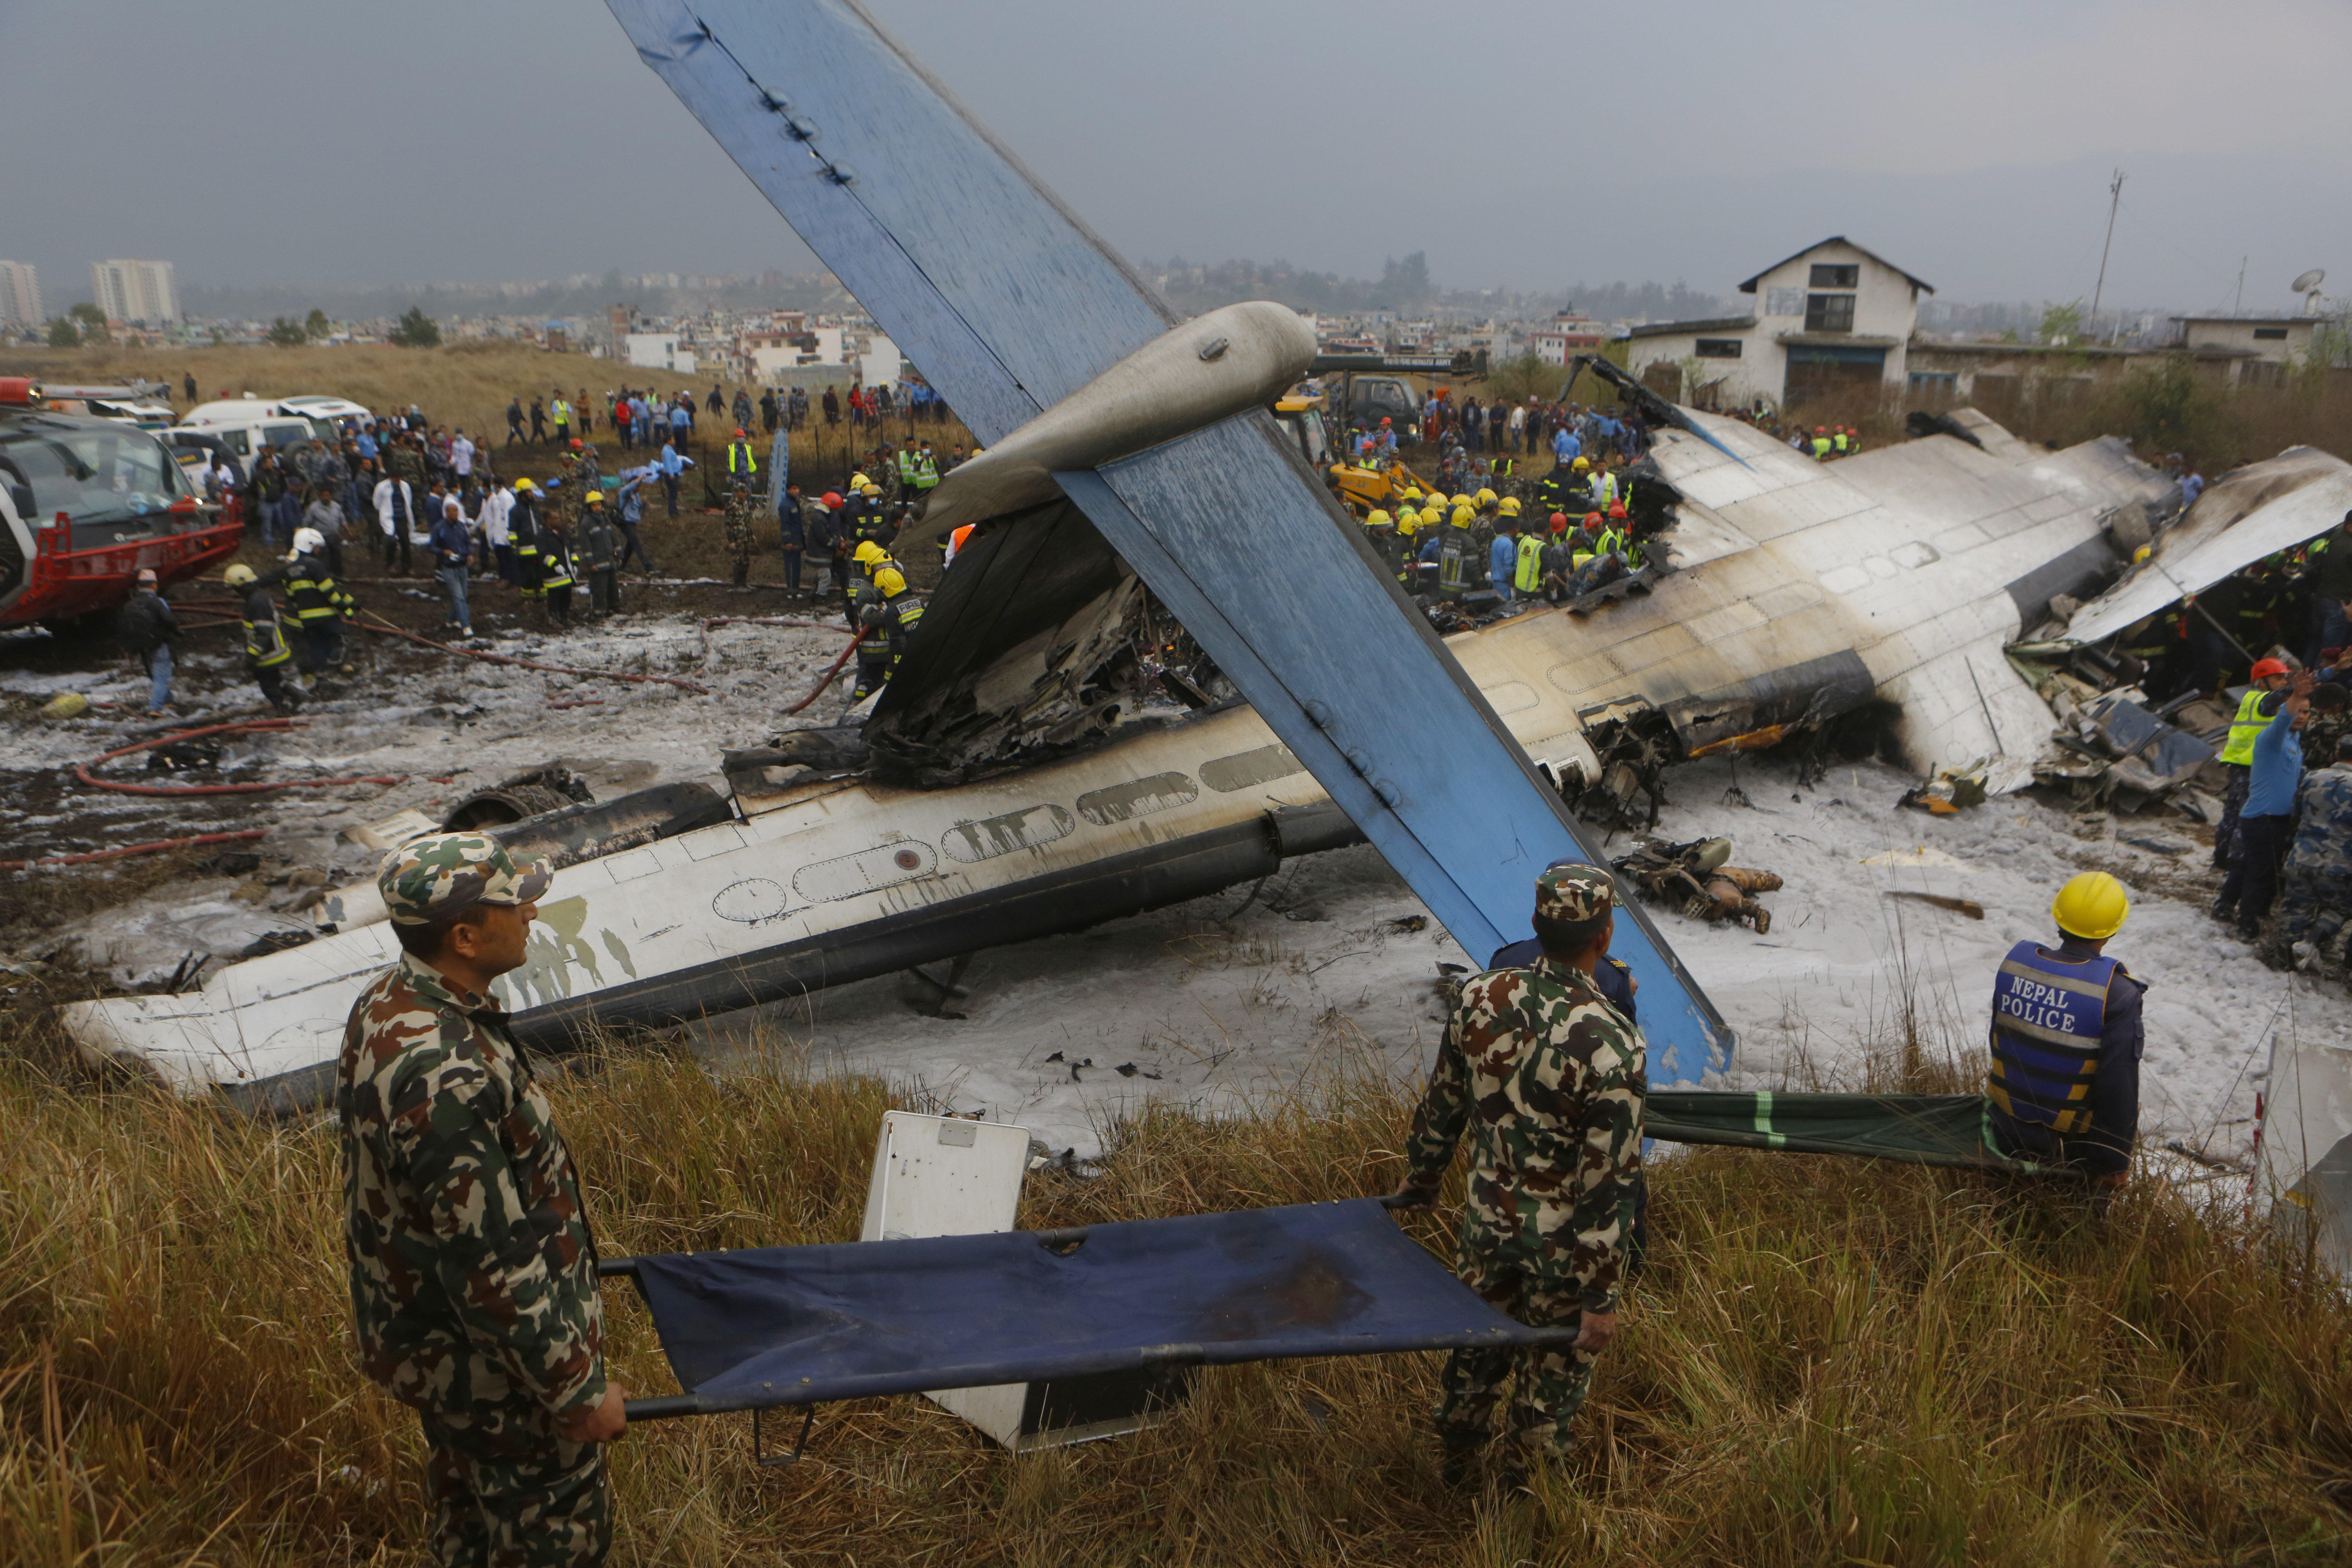 Nepal plane crash survivors react to "miracle" survival CBS News